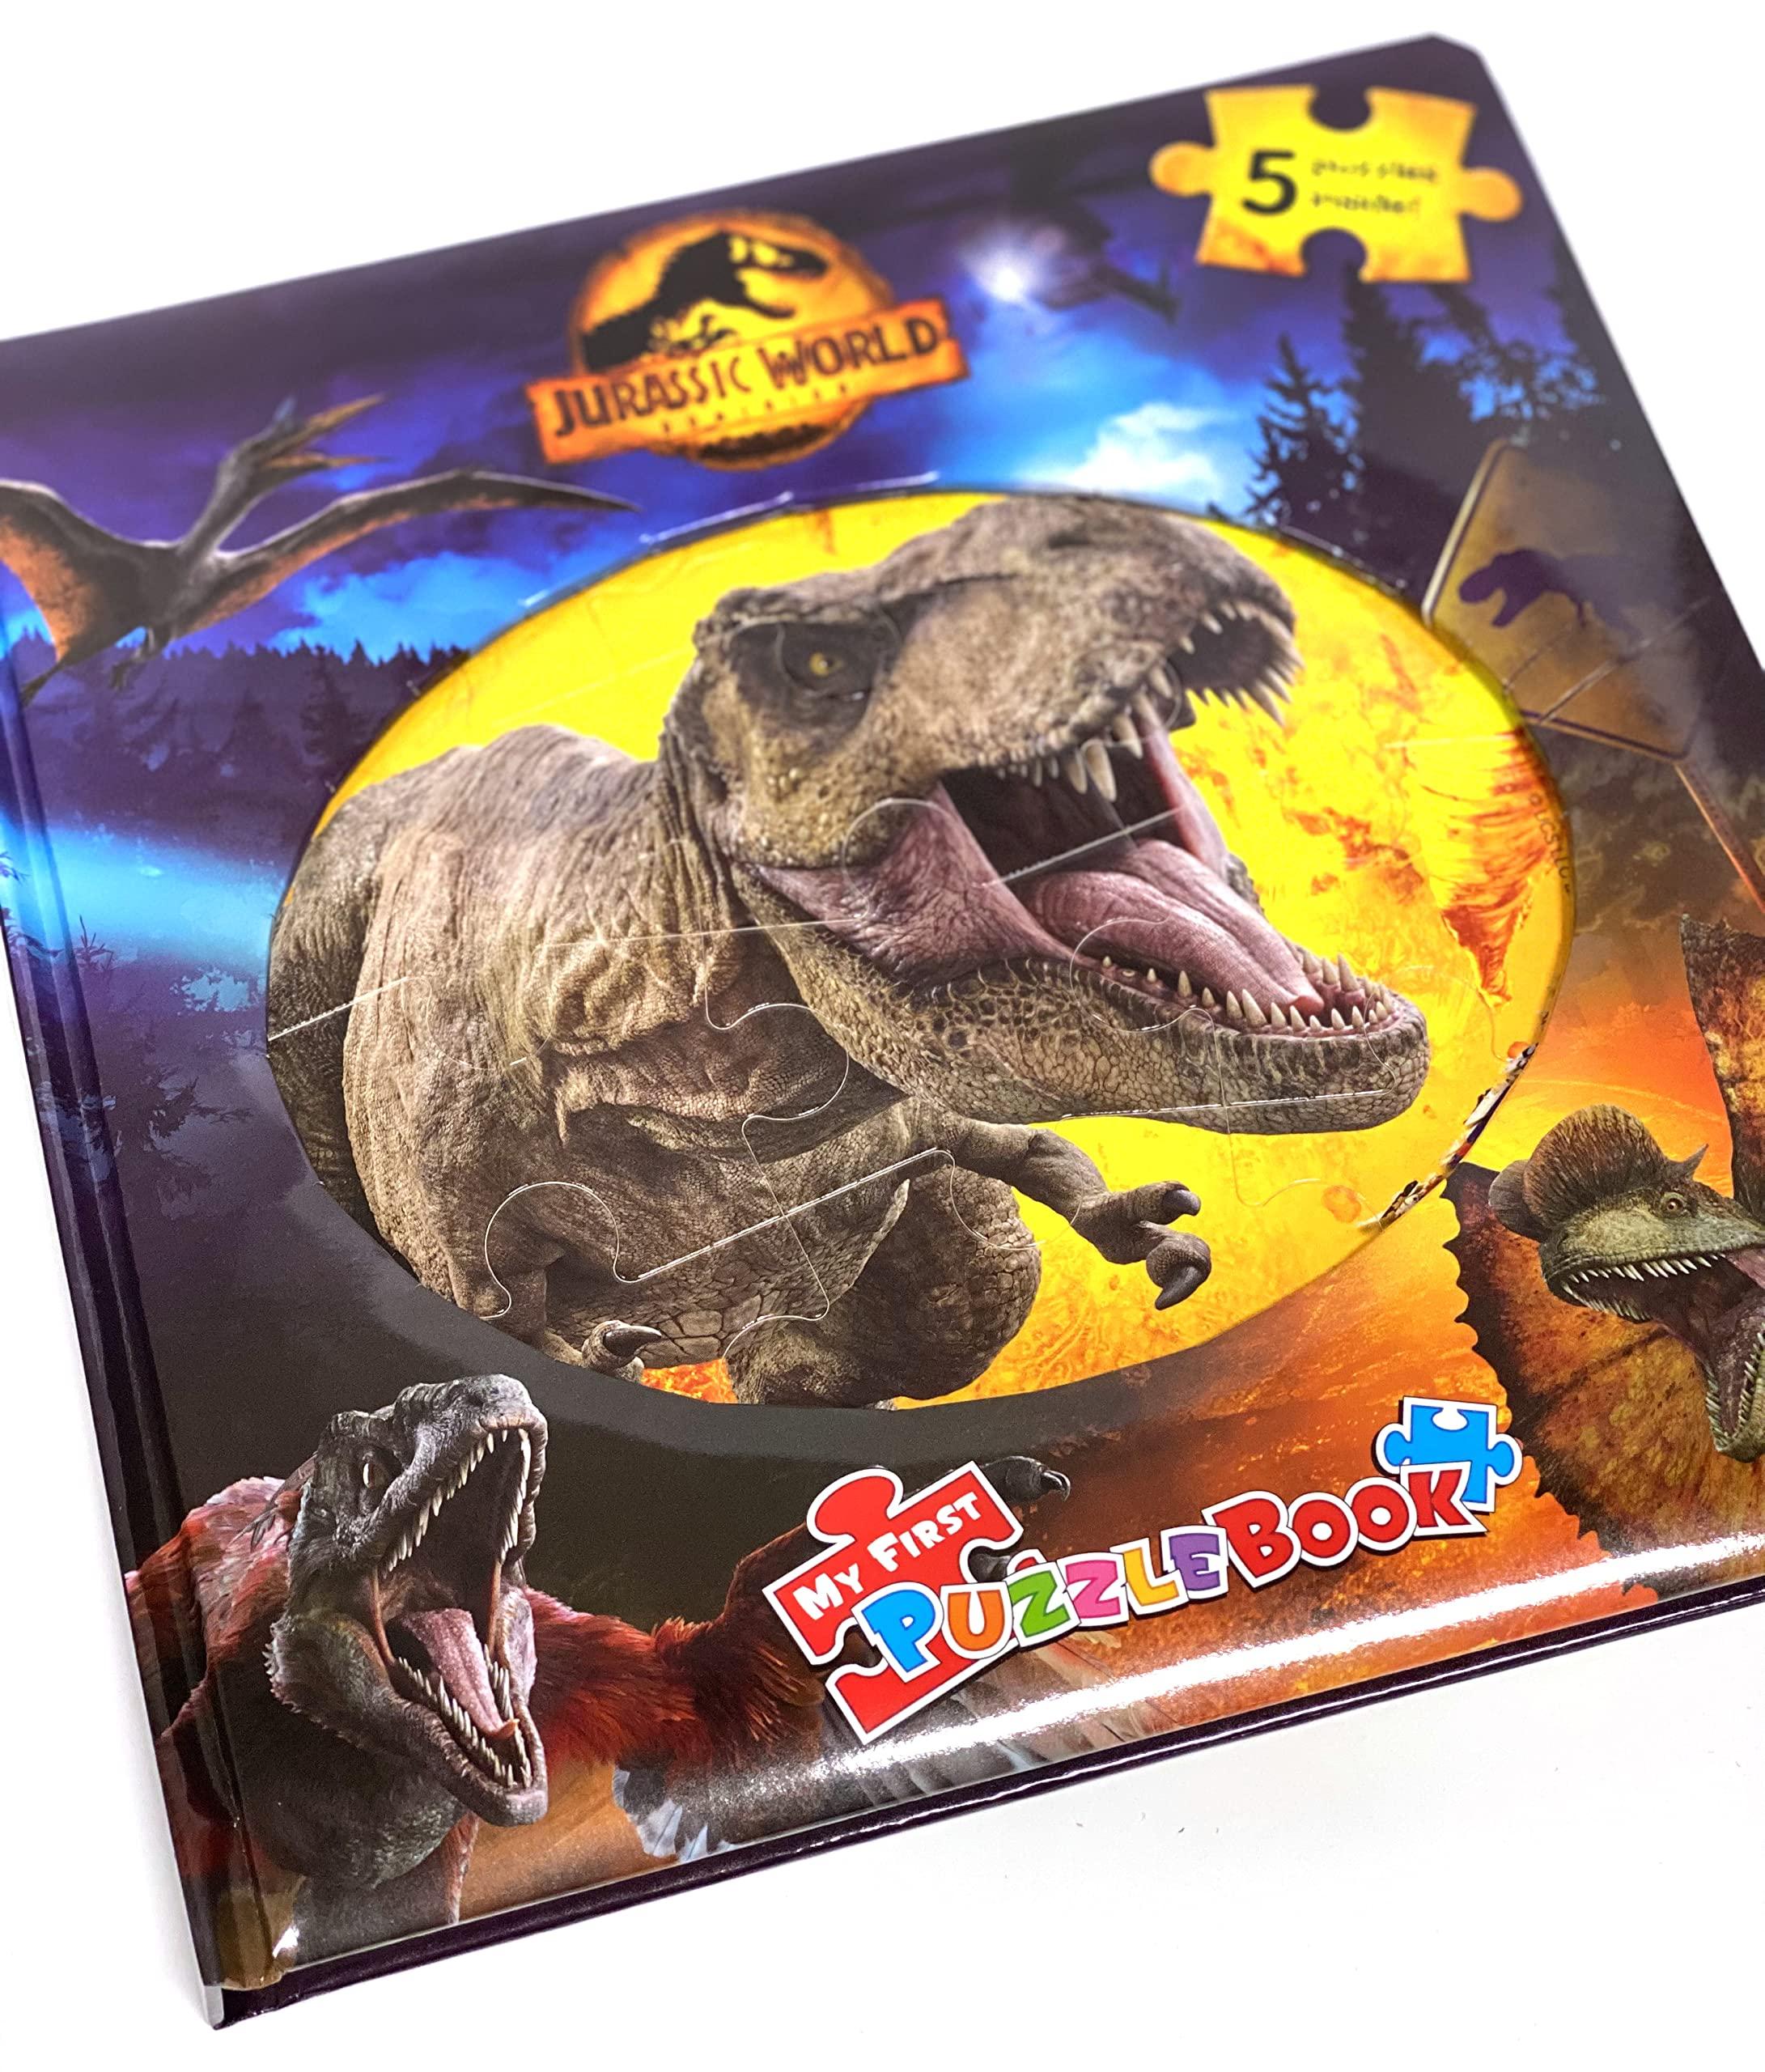 My First Puzzle Book: Universal Jurassic World